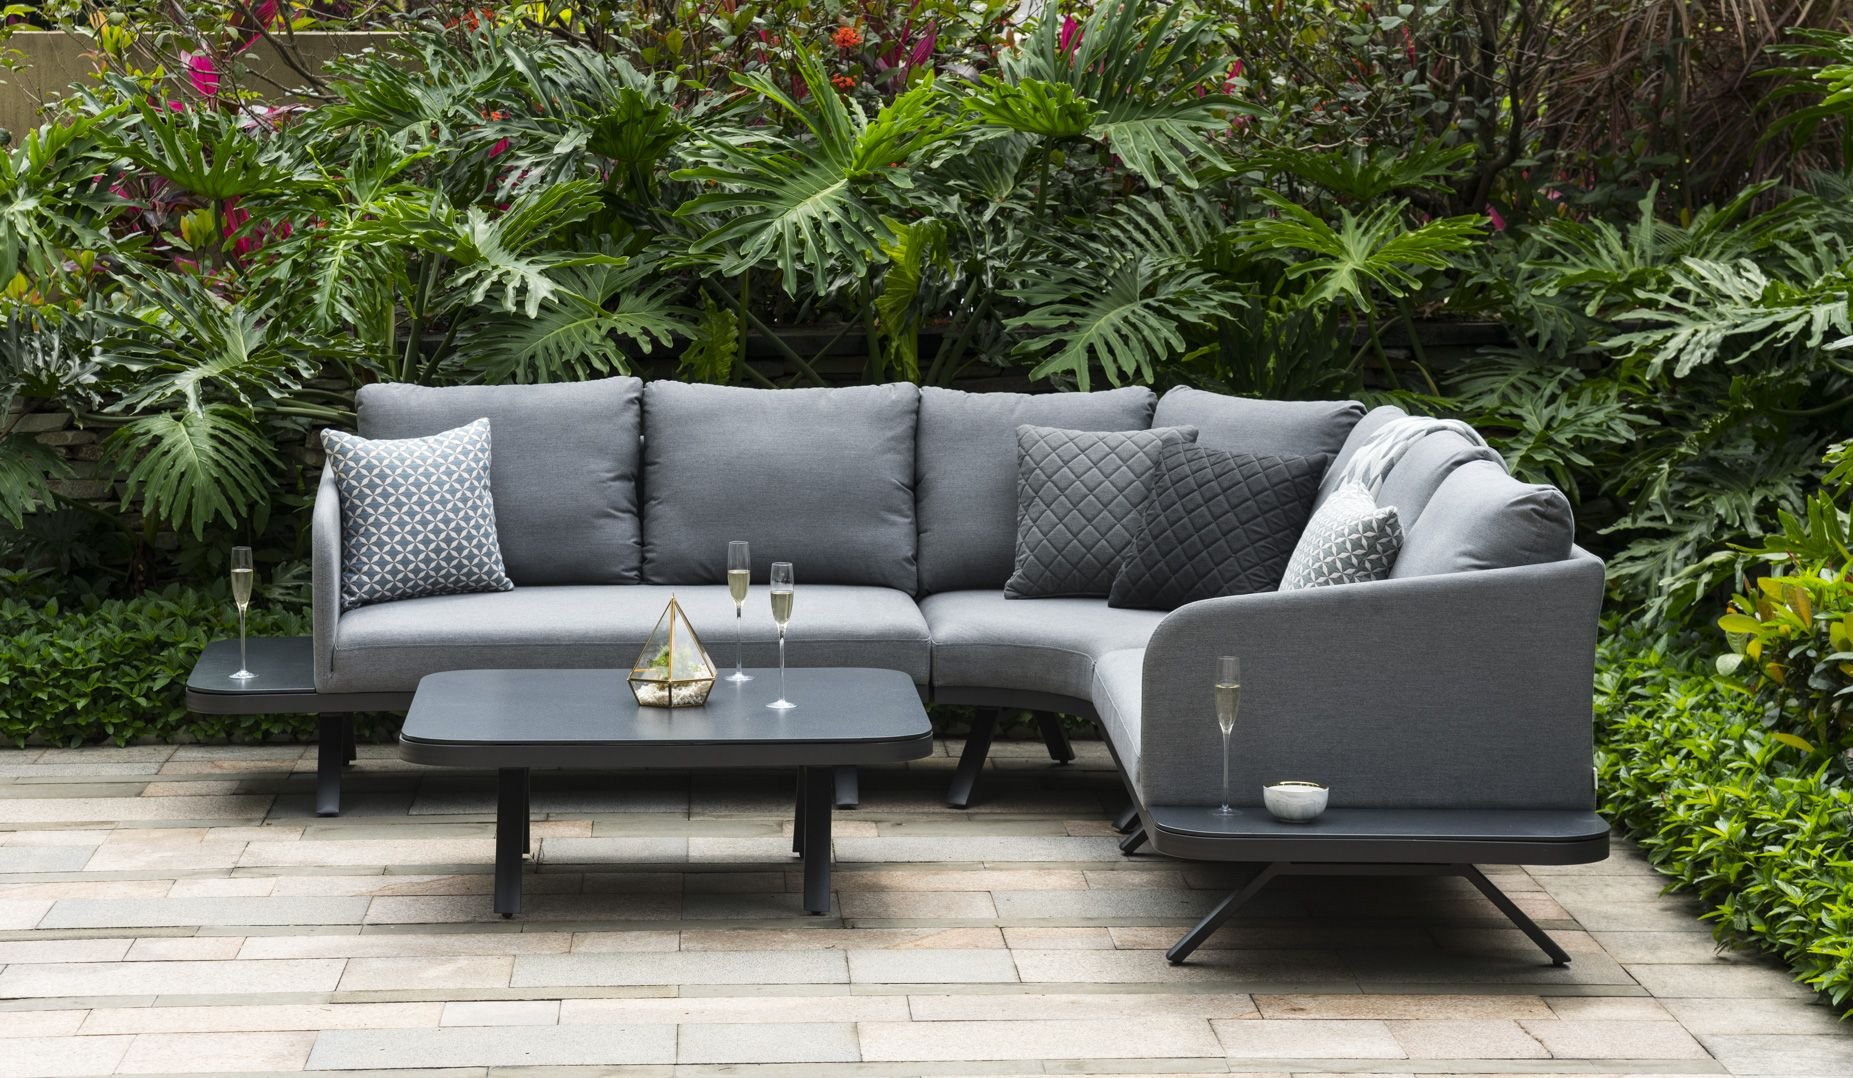 Garden furniture trends for summer 2022: Soft Curves